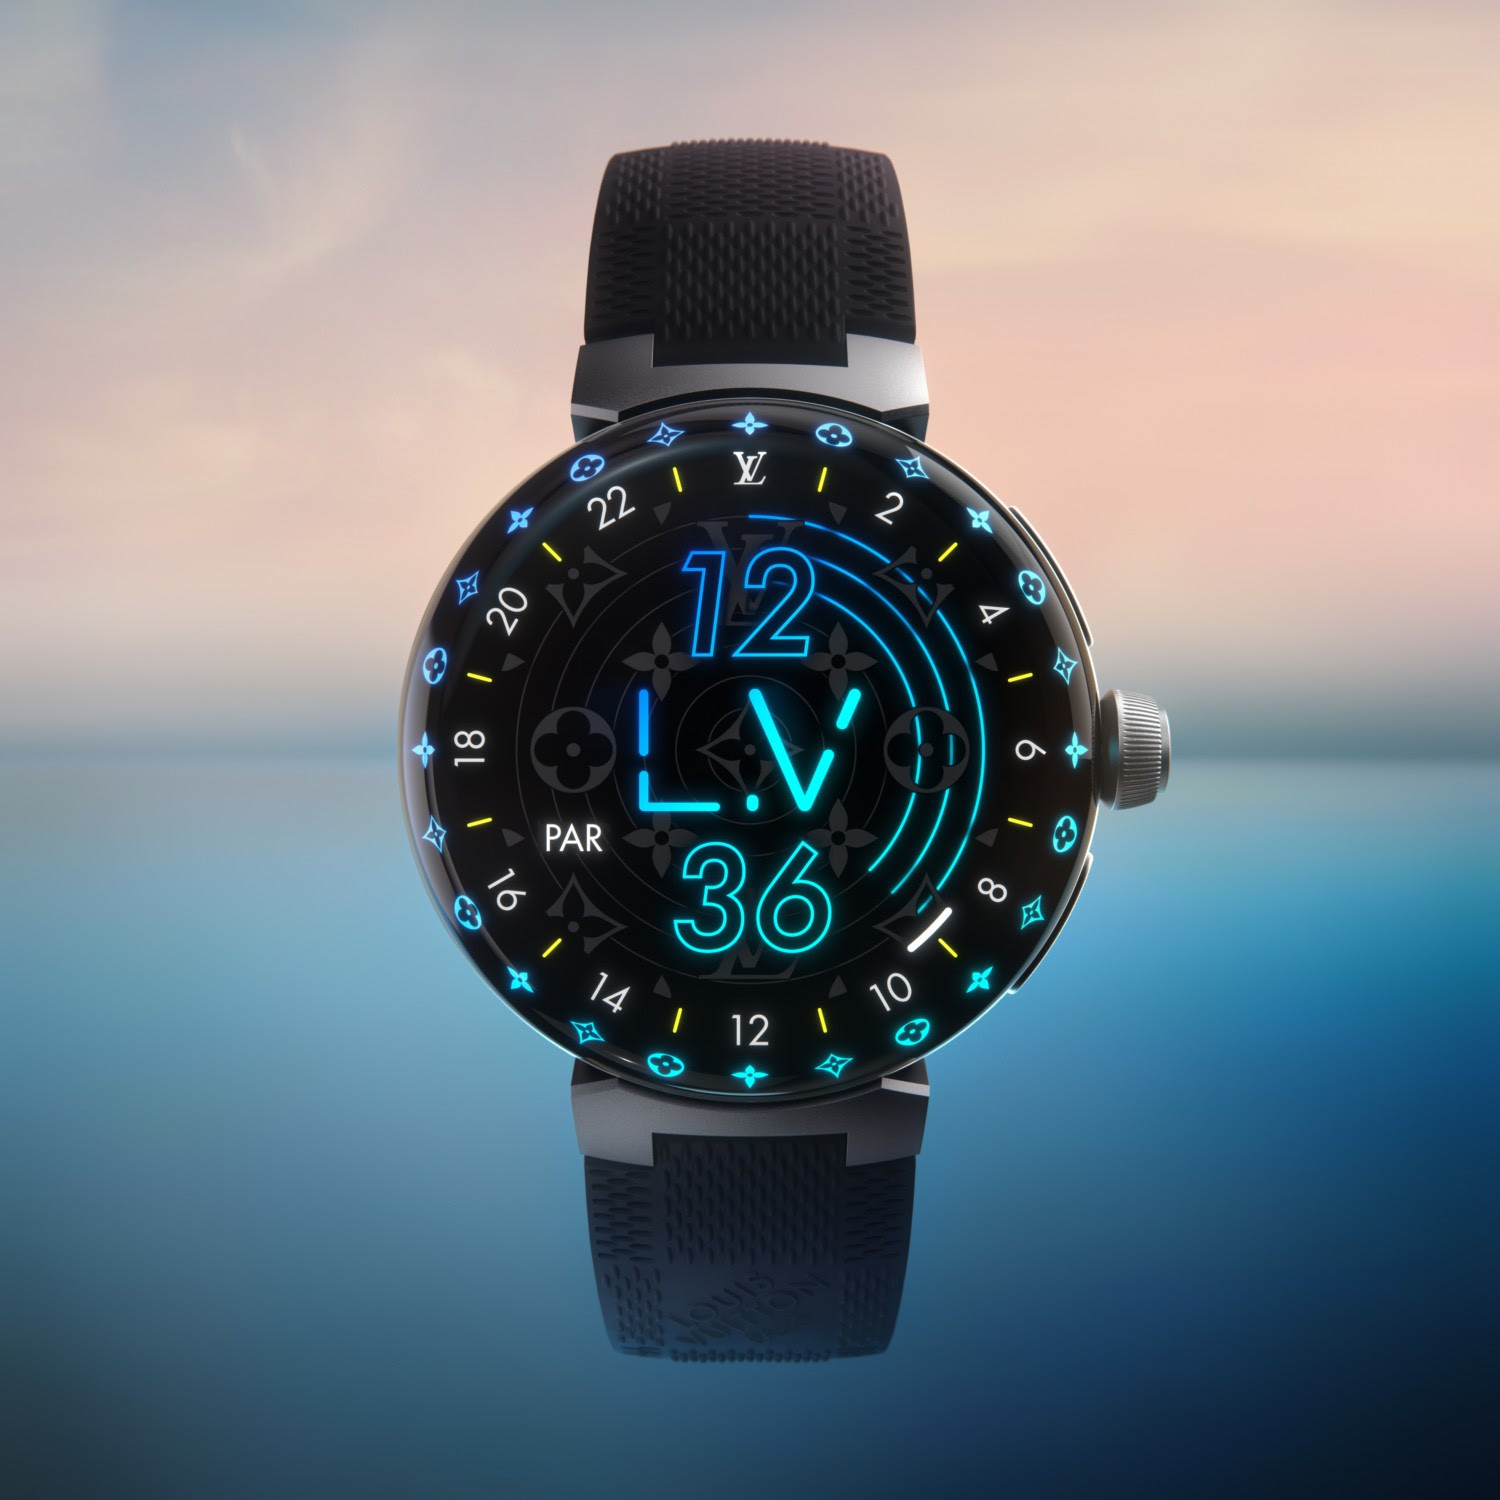 louis vuitton debuts second generation tambour horizon luxury smartwatch